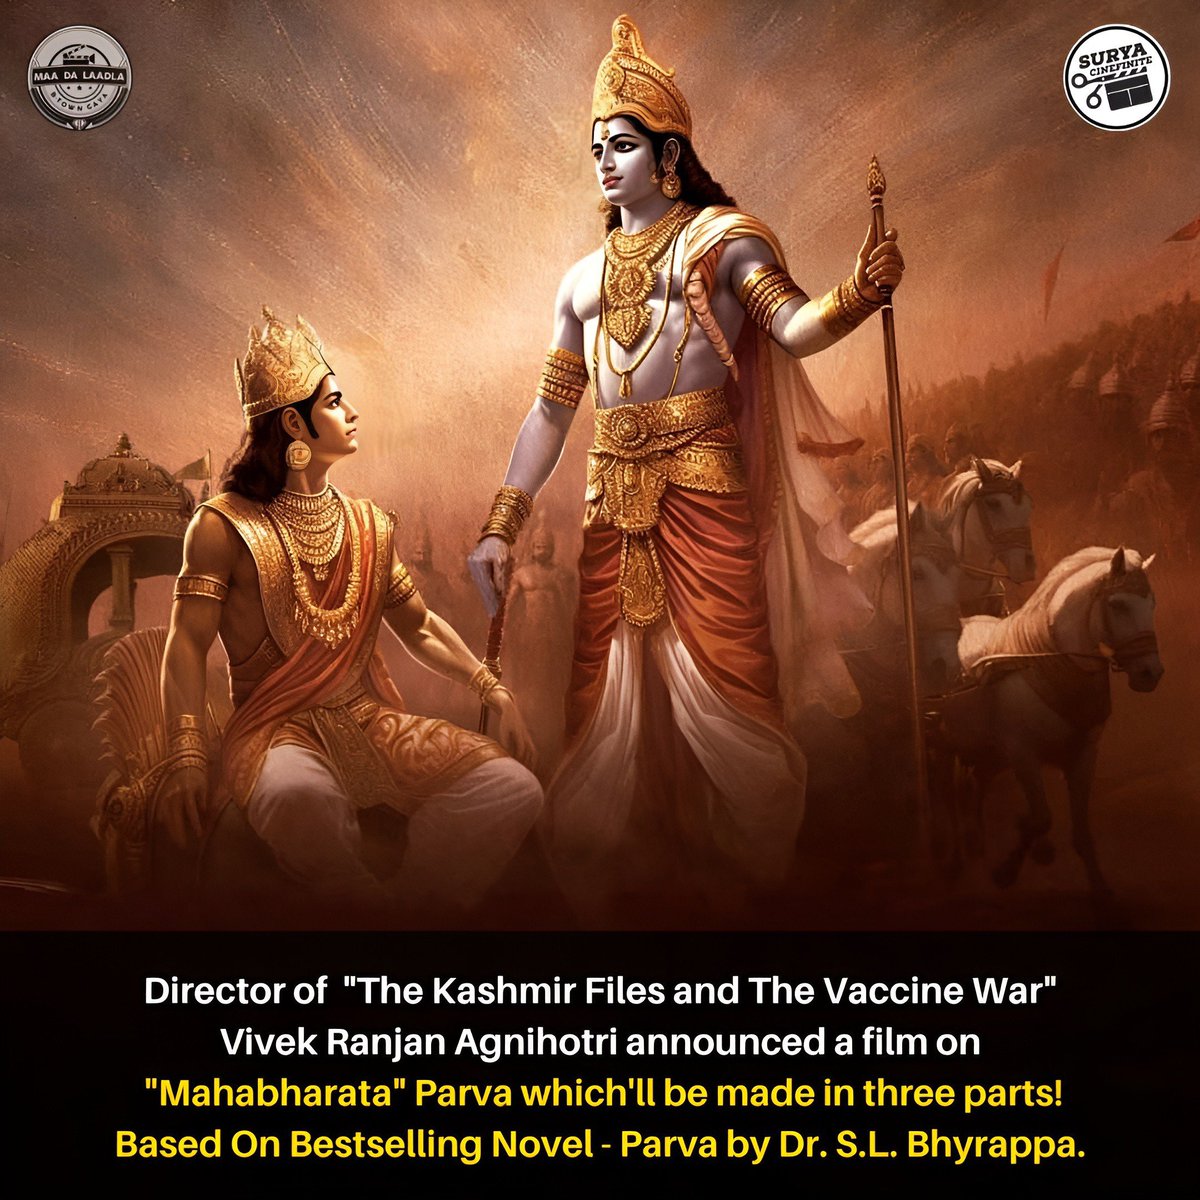 Director Vivek Ranjan Agnihotri announced his next film on Mahabharata - #Parva: A Bestselling Novel by #SLBhyrappa. 🏹 

#Mahabharata #VivekRanjanAgnihotri #TheVaccineWar #TheKashmirFiles